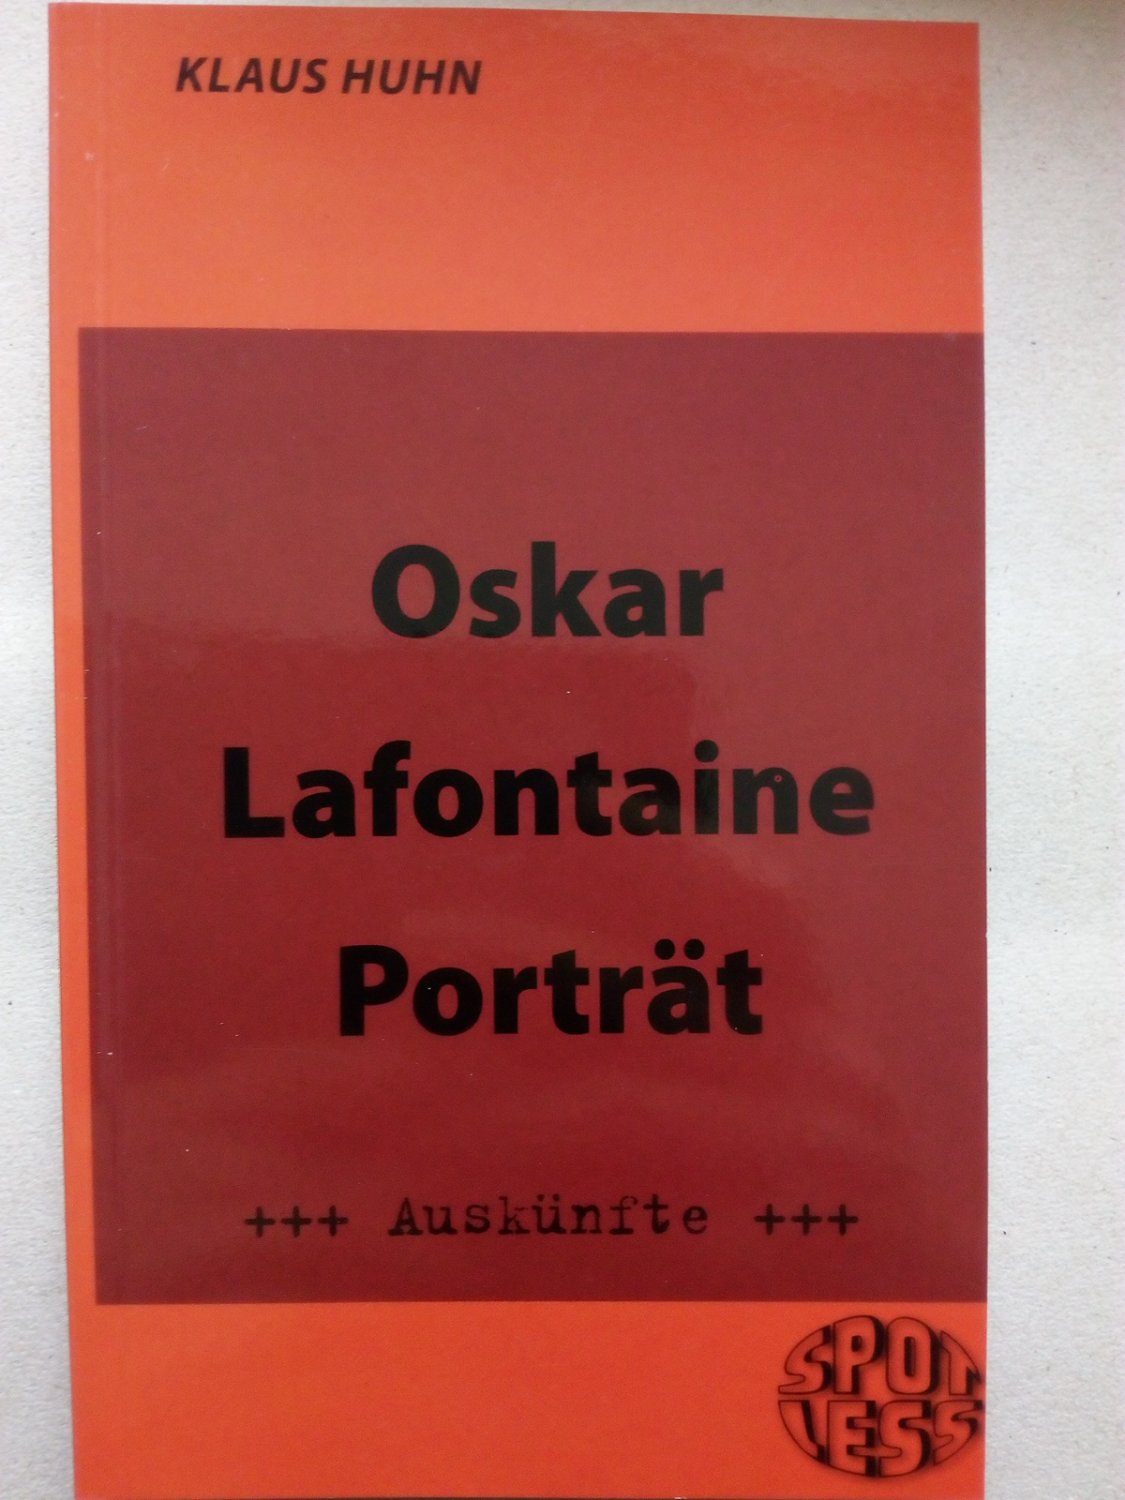 Oscar Lafontaine - Porträt, Auskünfte - Huhn, Klaus